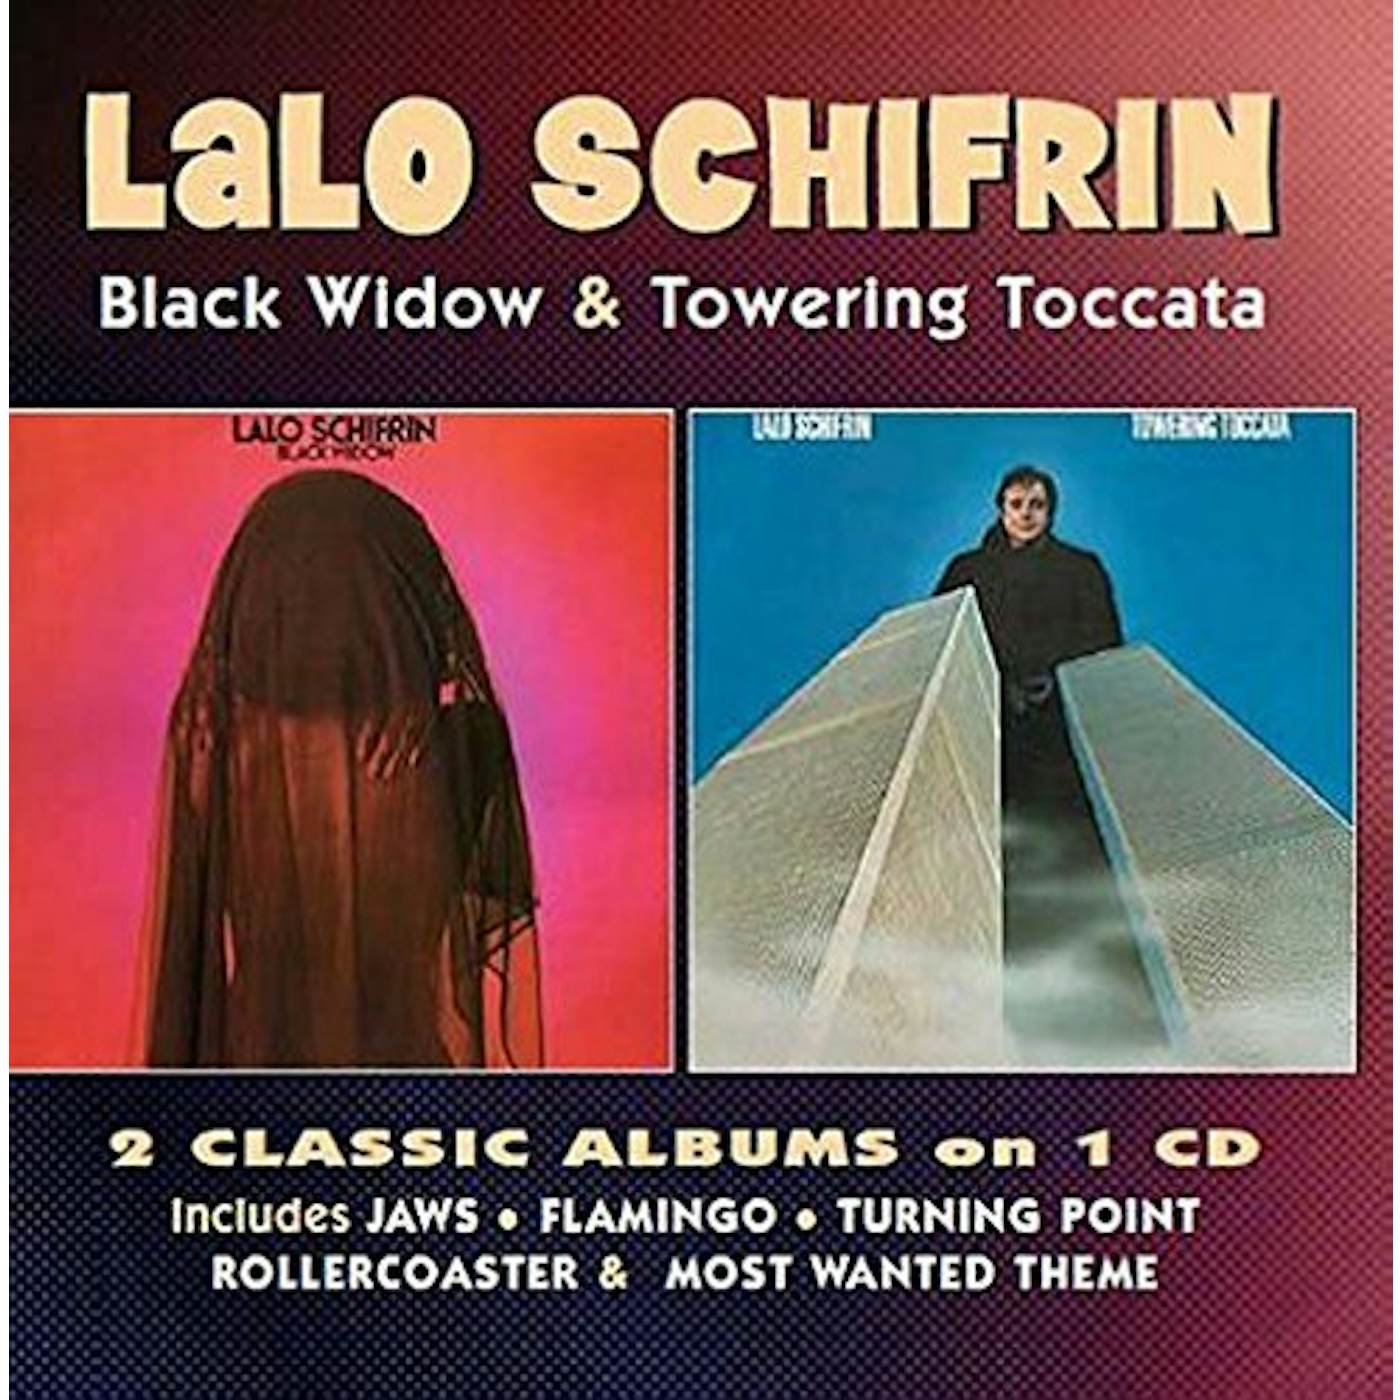 Lalo Schifrin BLACK WIDOW / TOWERING TOCCATA CD